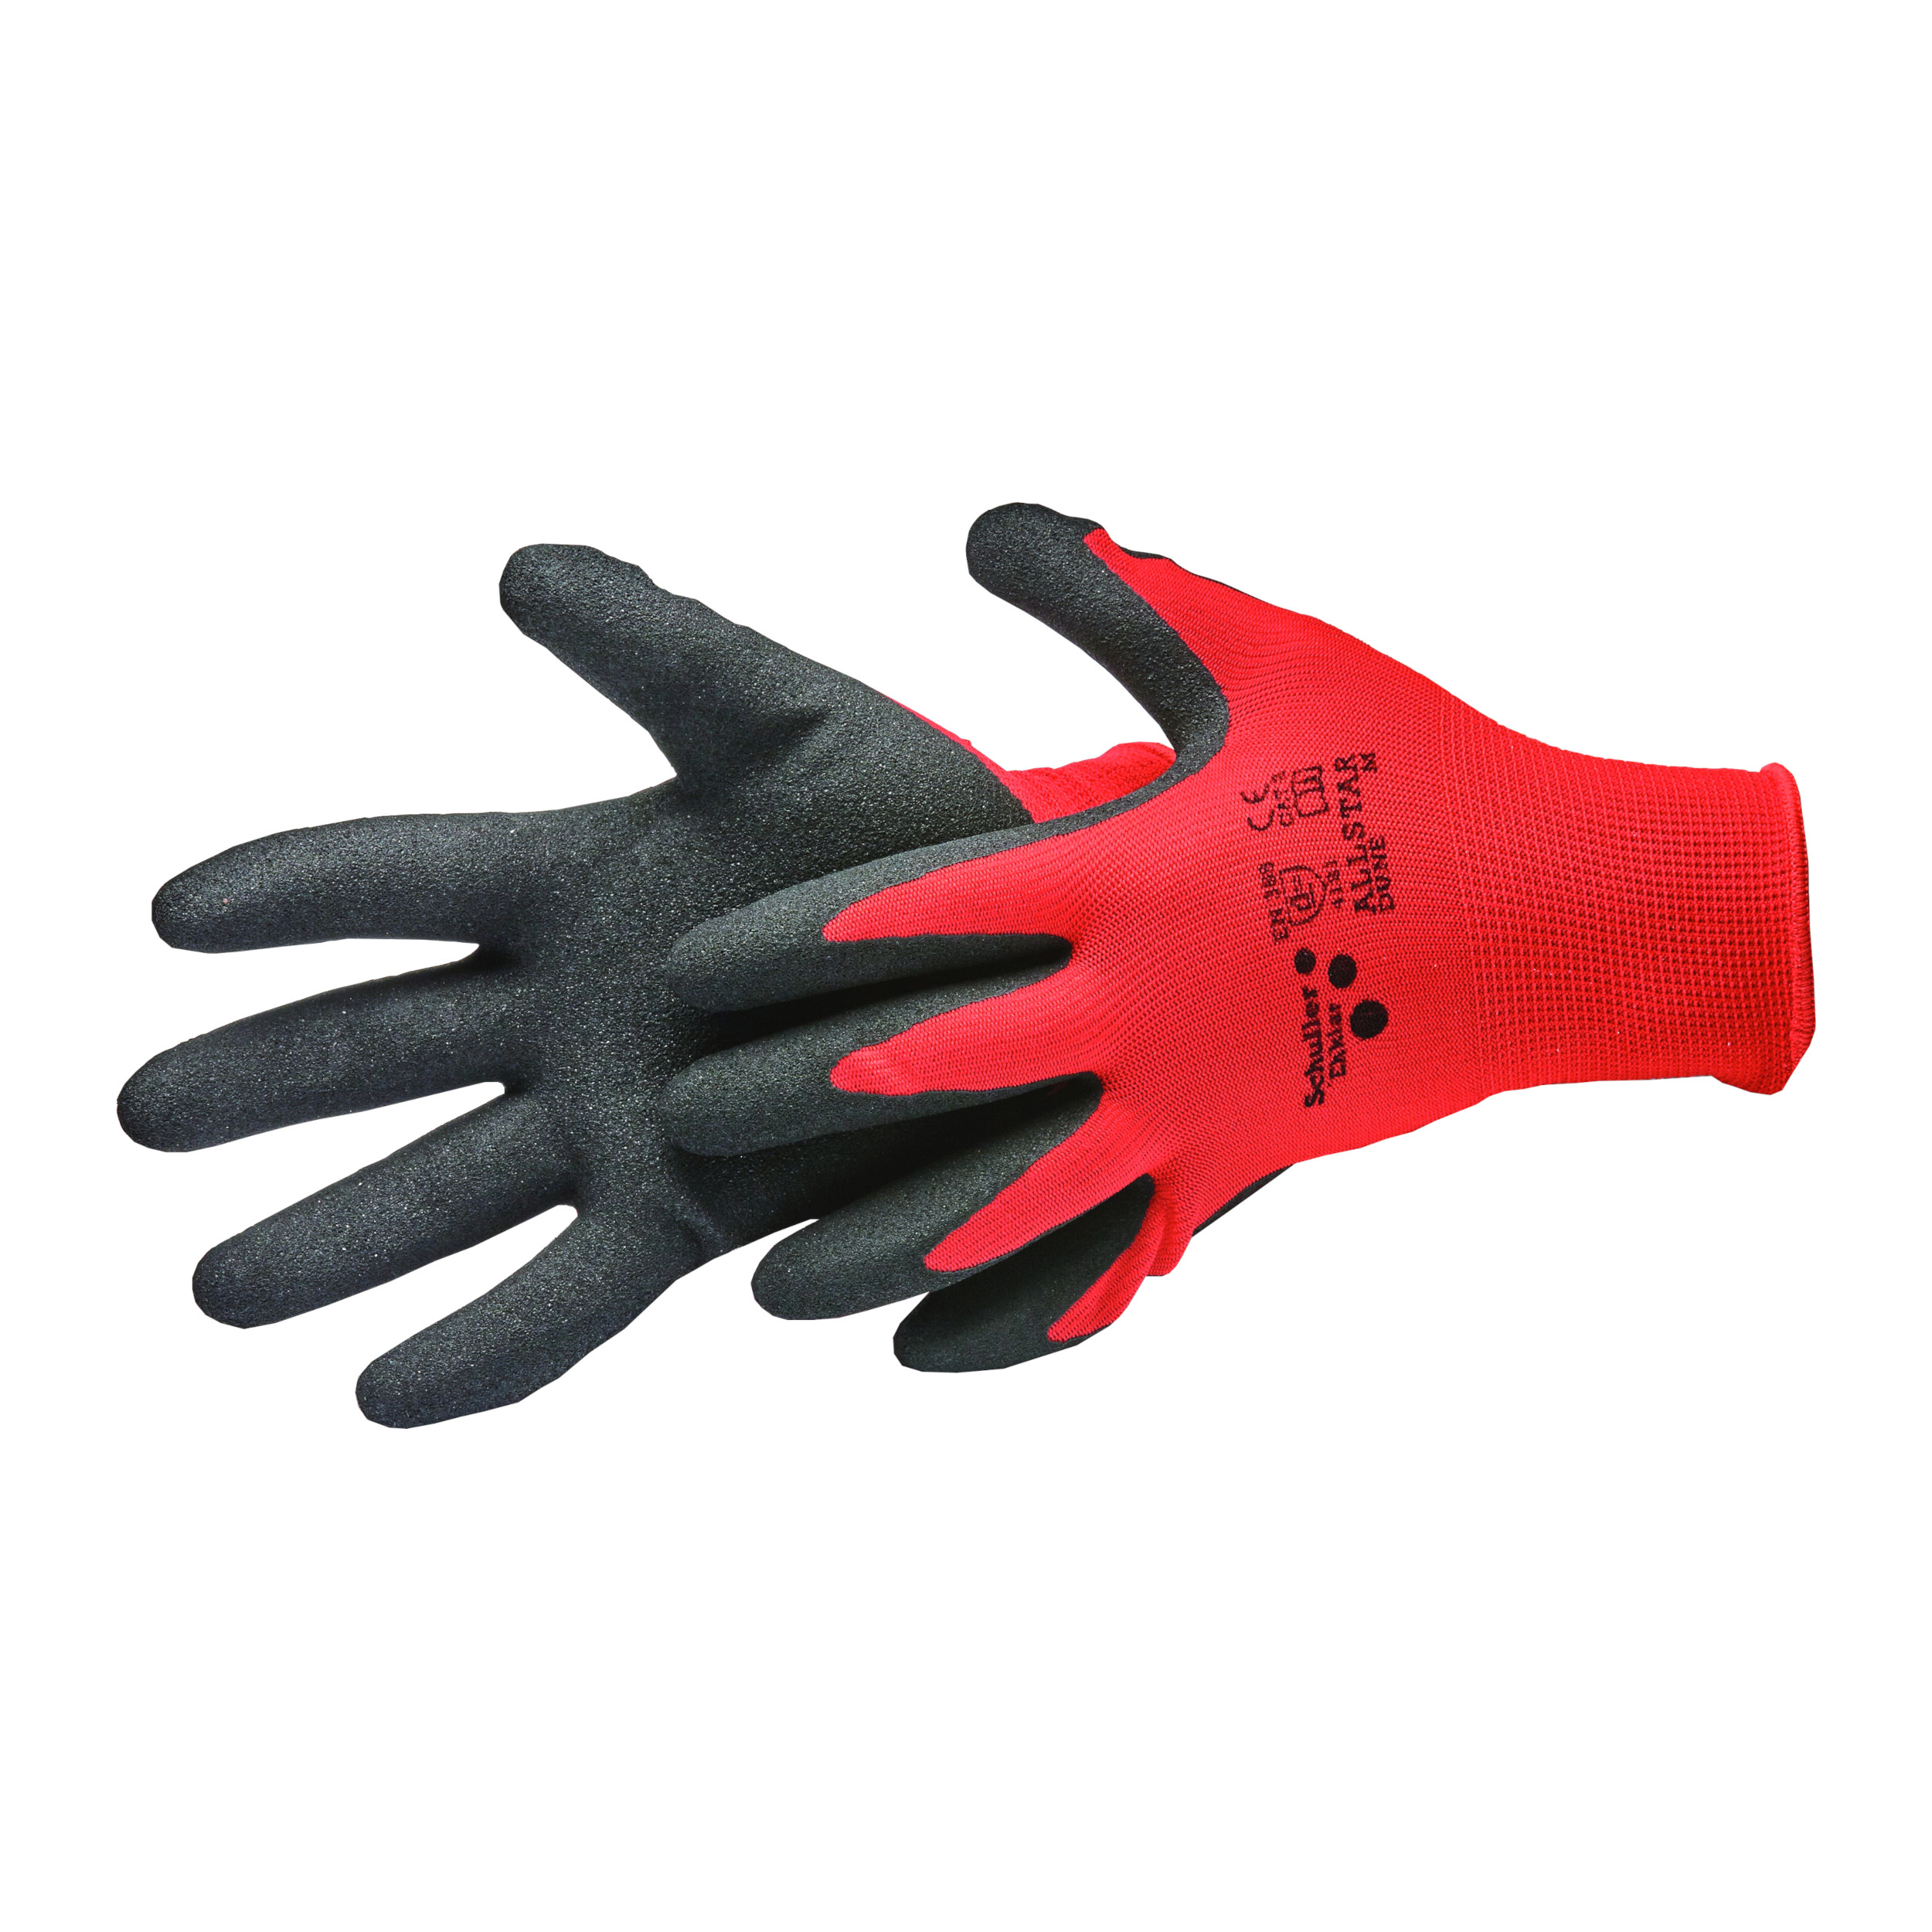 rukavice ALLSTAR, s nitrilovým potahem a úpletem, velikost 9 0.07 Kg TOP Sklad4 600119 152